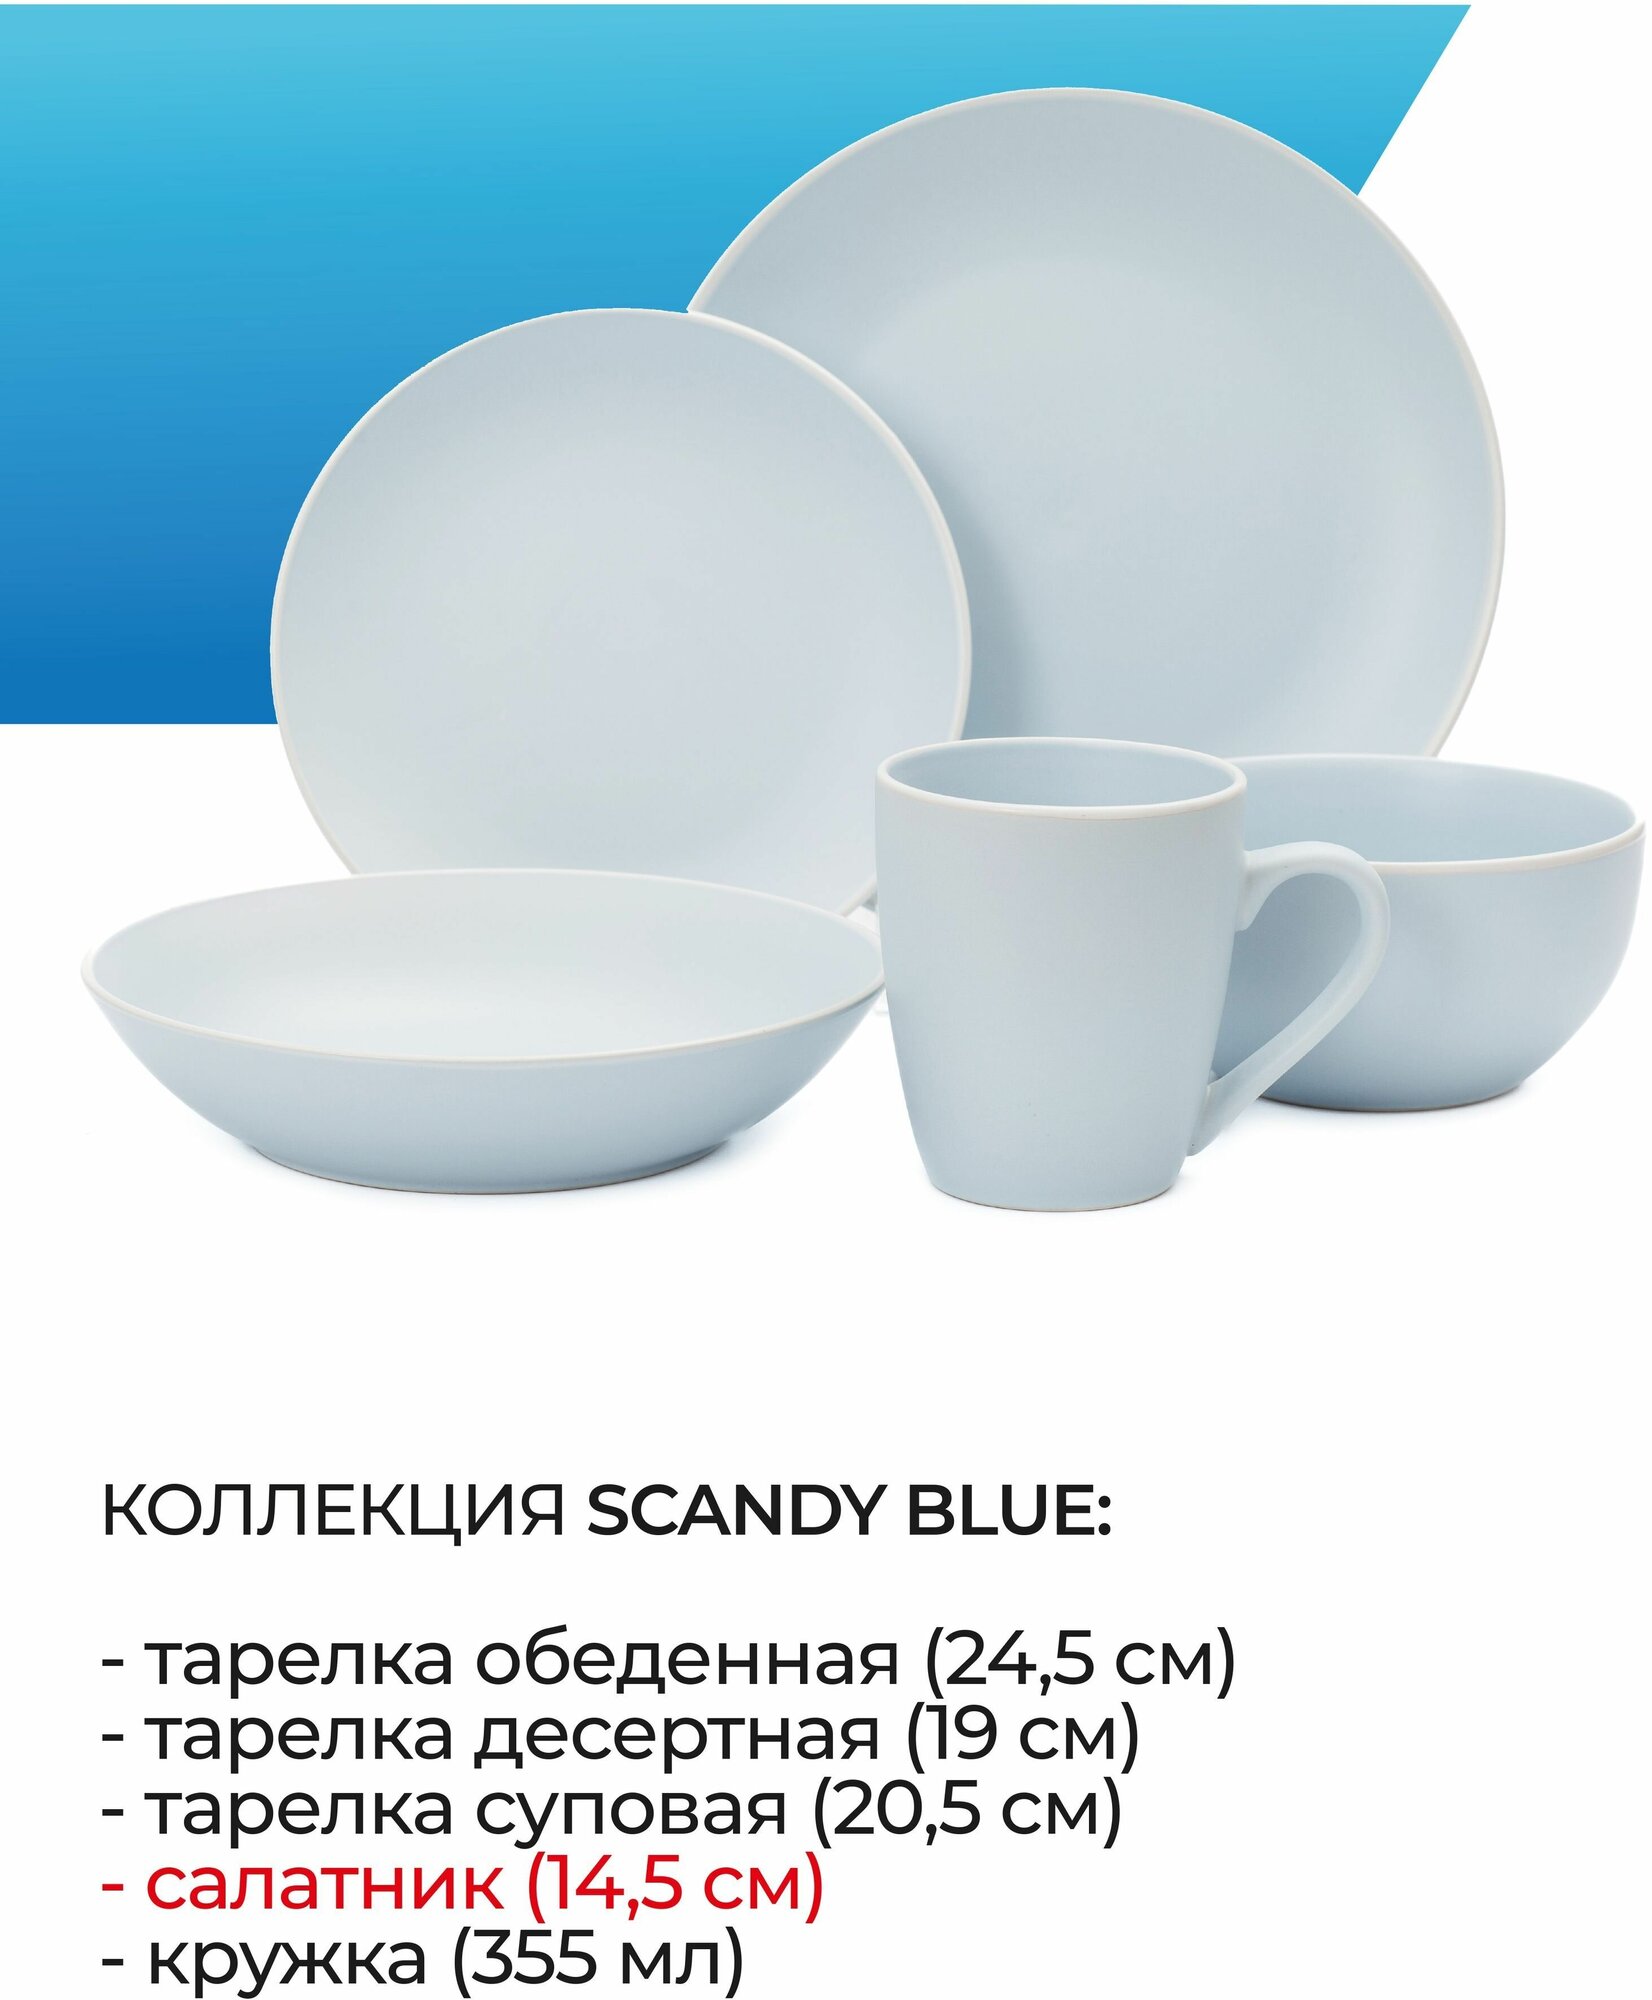 Салатник SCANDY BLUE 14.5см FIORETTA TDB547 - фото №4